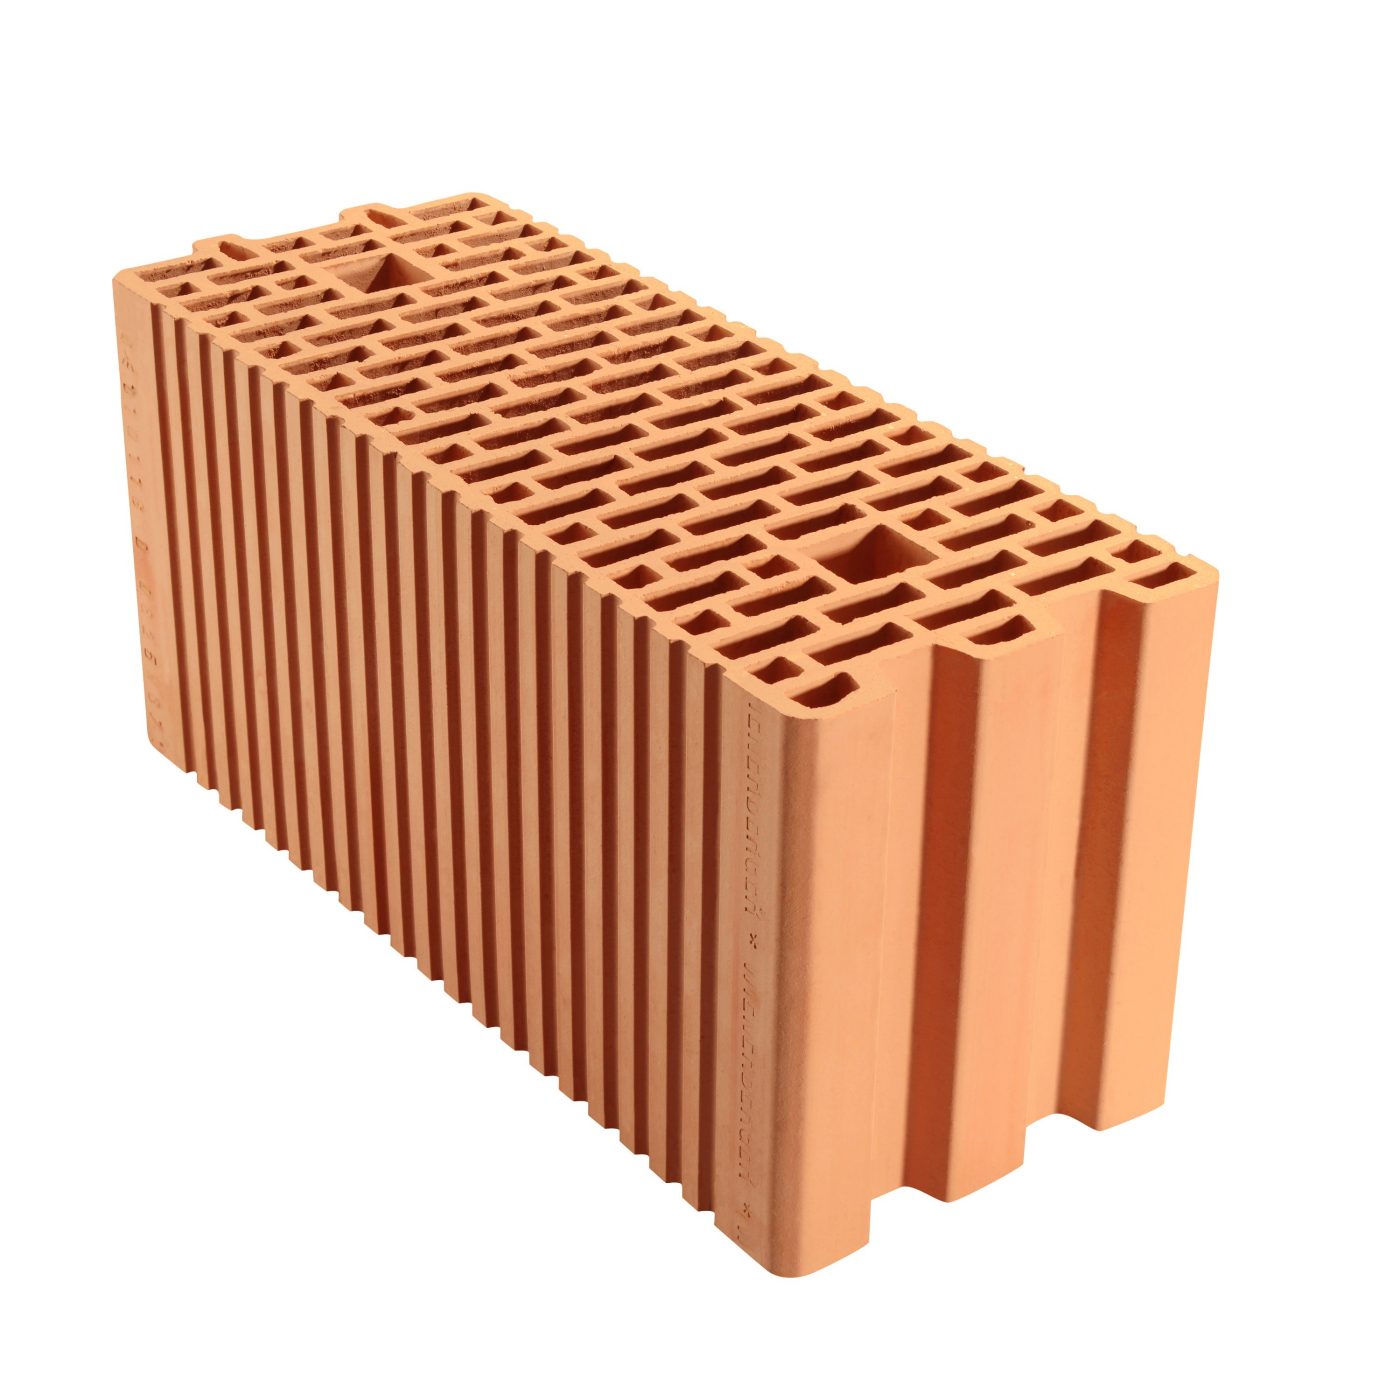 Engineering-Bricks - Porotherm Brick 20 joggle joint, 500 x 200 x 238 mm, https:maxbau.ro